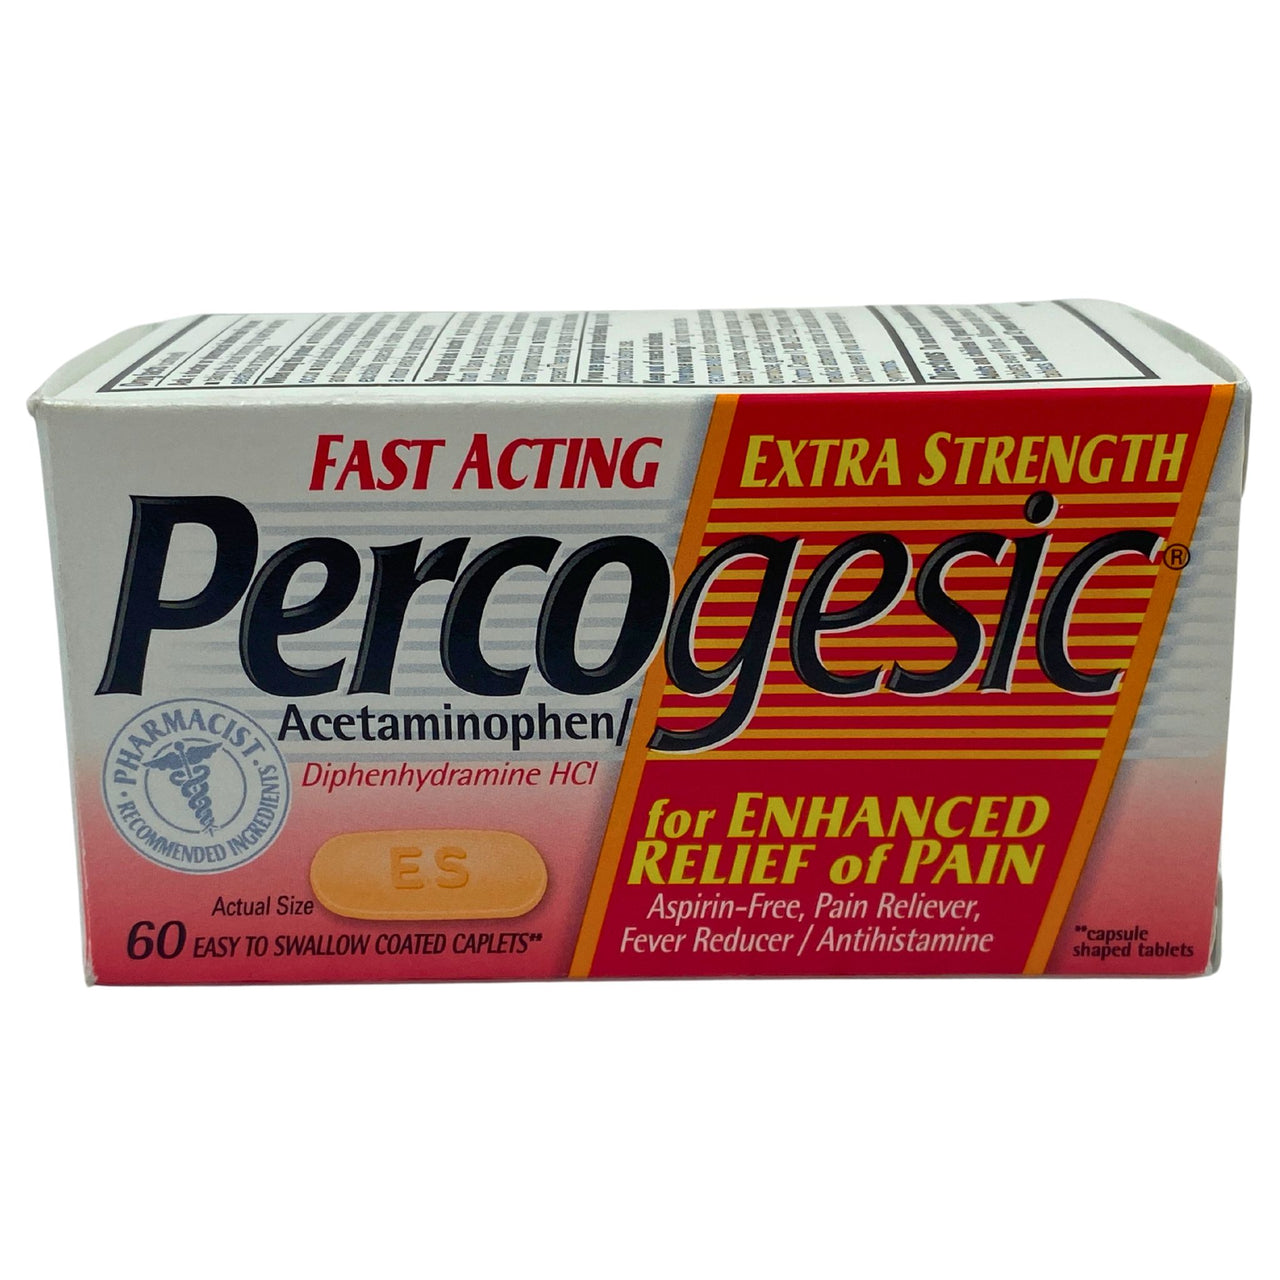 Percogesic Fast Acting Extra Strength Acetaminophen 